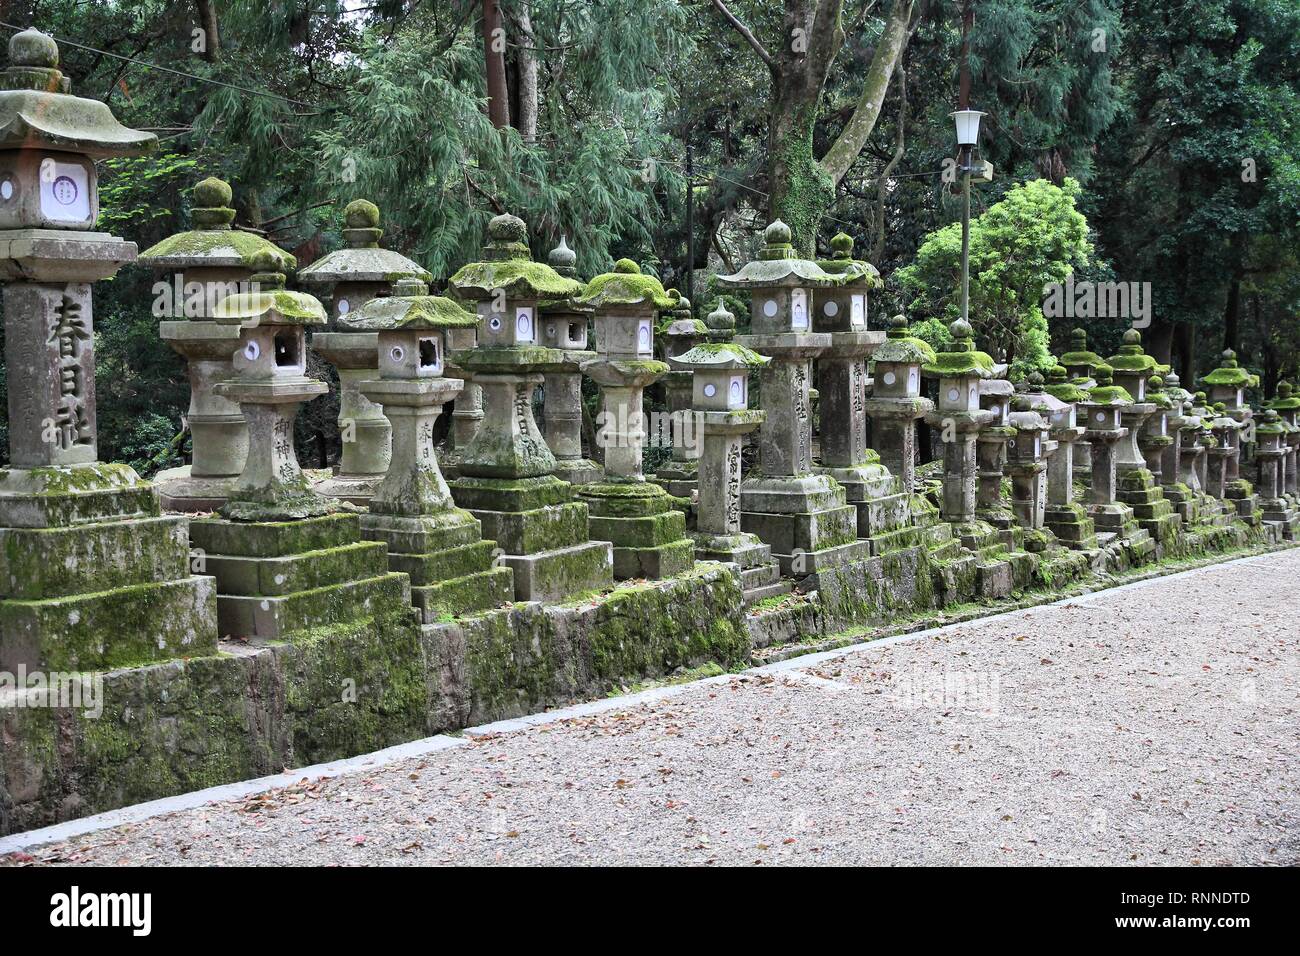 Nara, Japan (Kansai region) - old city on UNESCO World Heritage Site. Old mossy stone lanterns on the way leading to Kasuga Shrine. Stock Photo